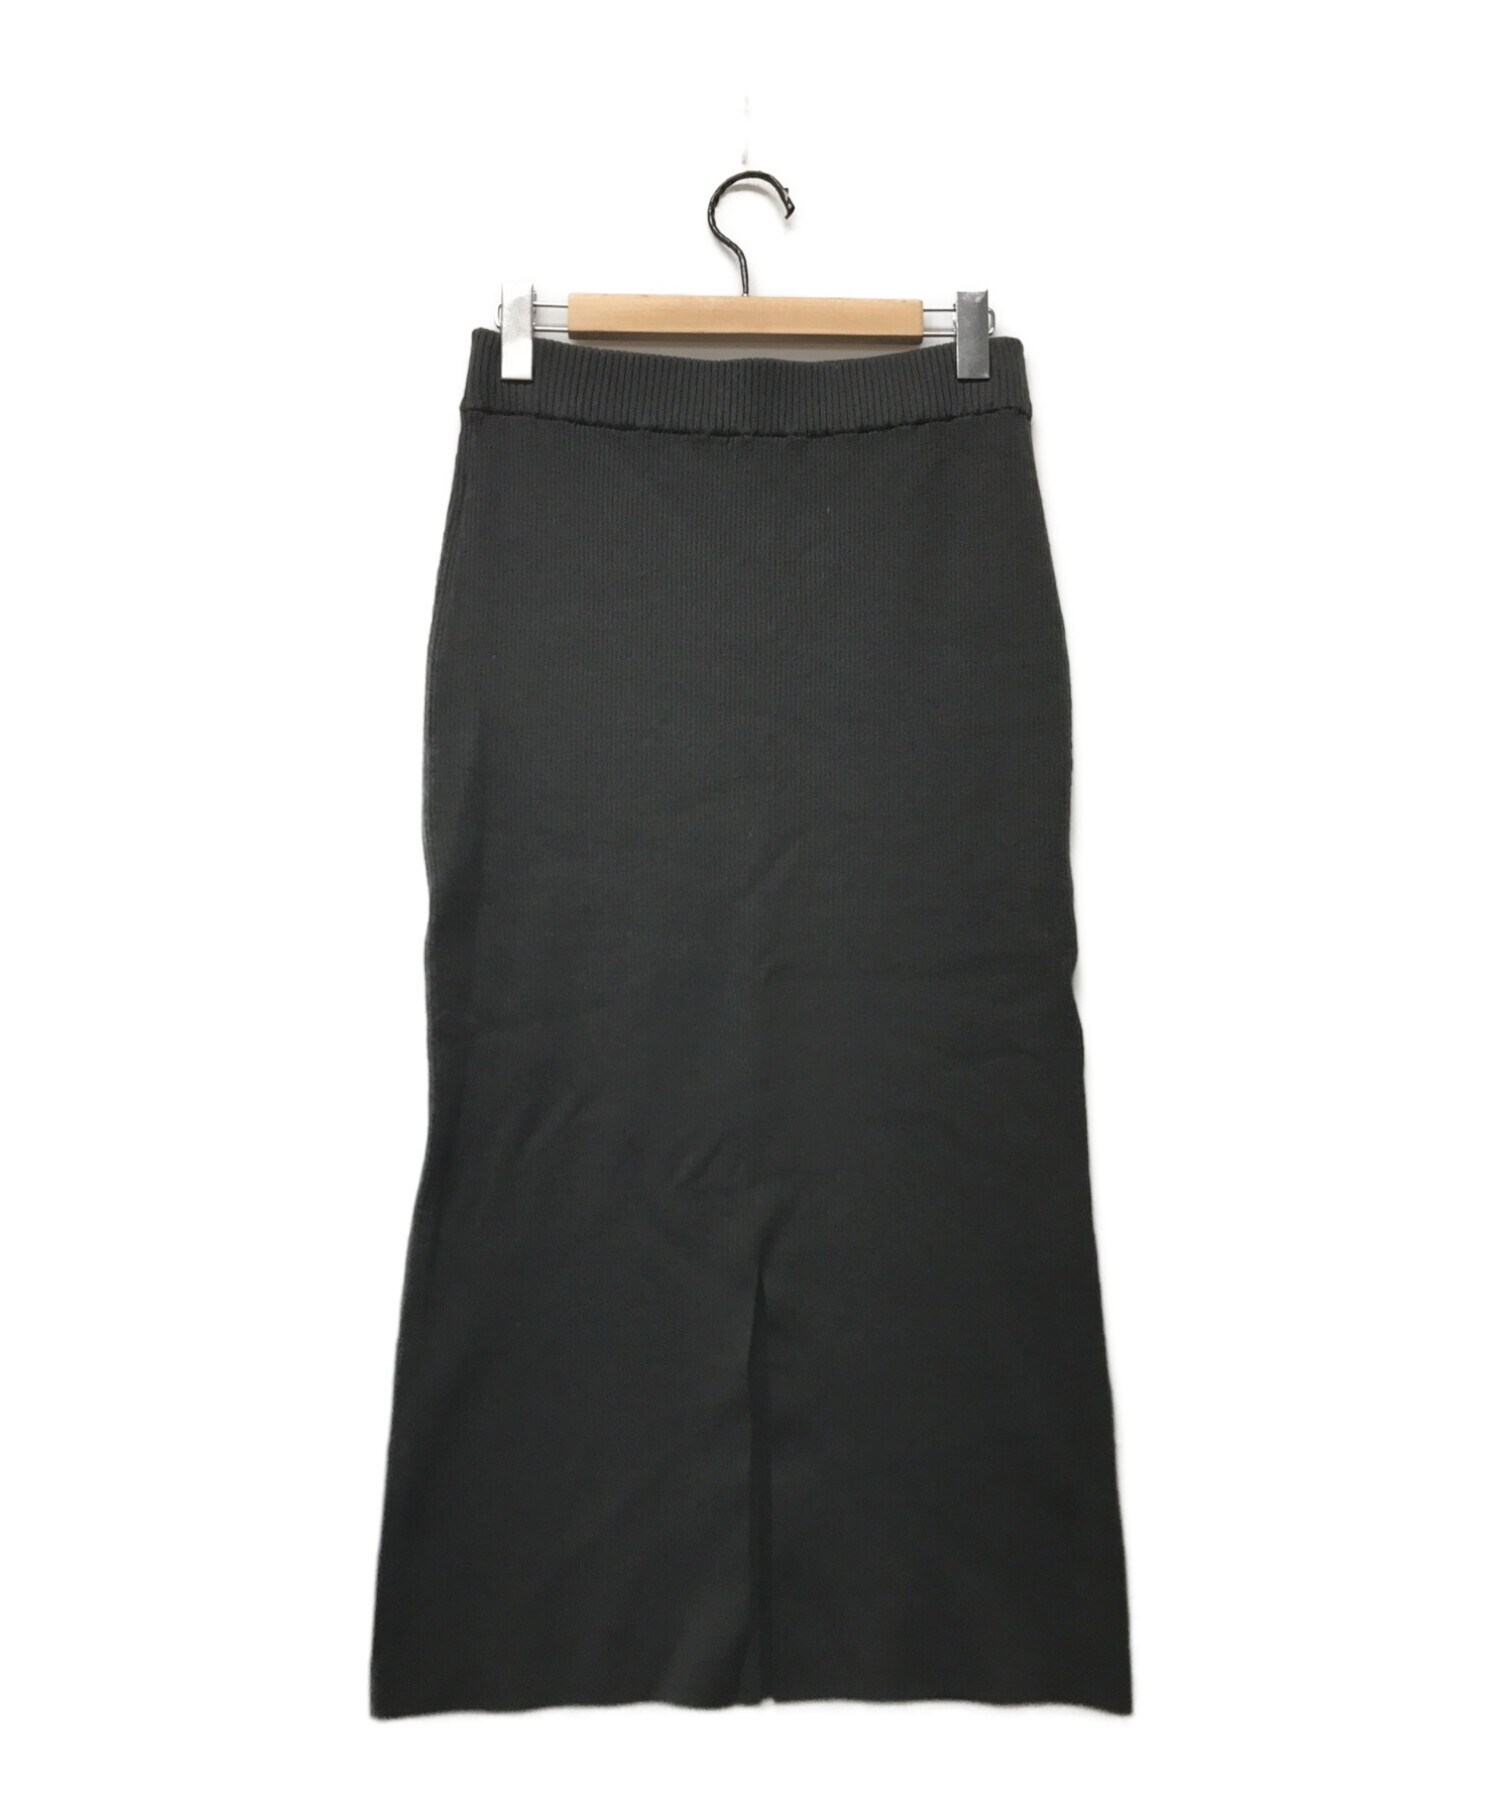 AP STUDIO スカート カーキ - スカート